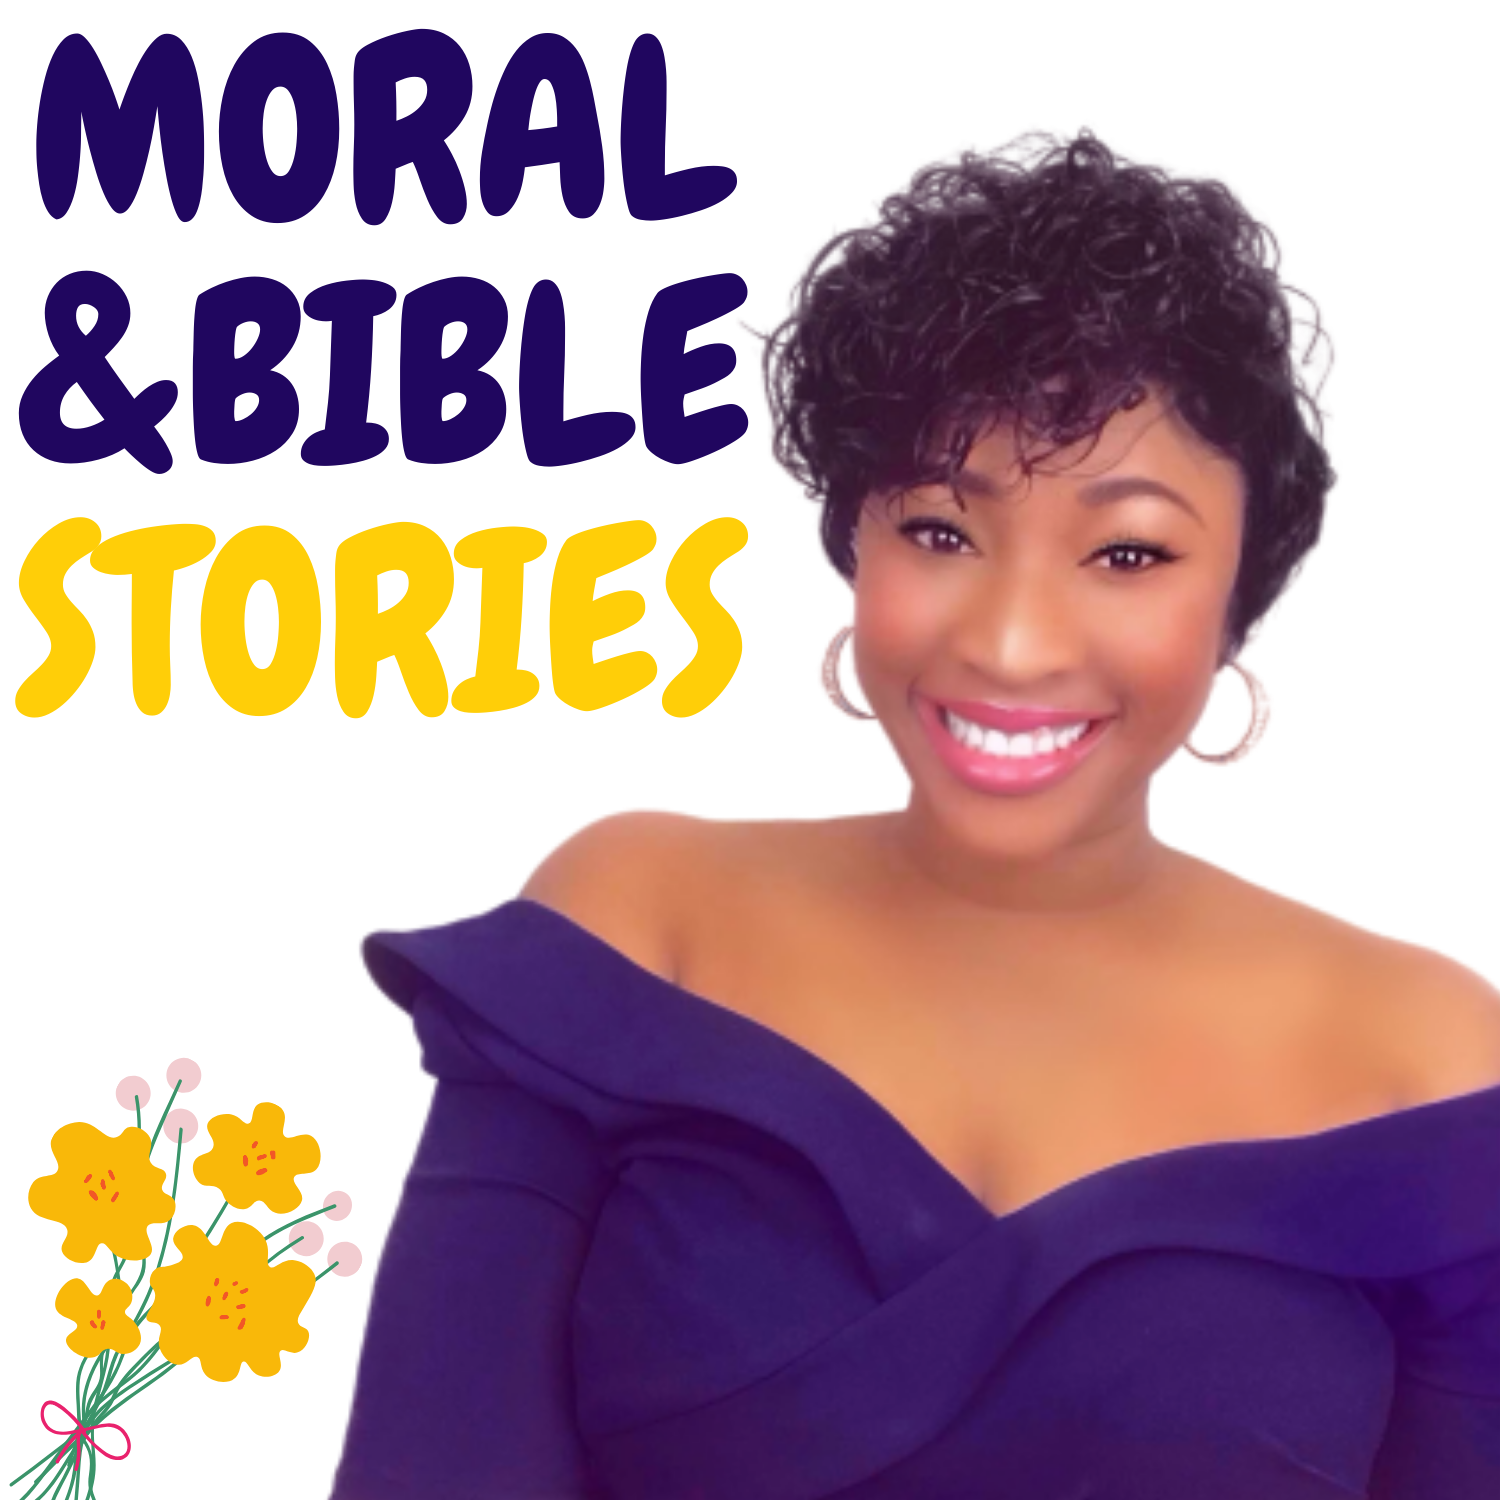 Moral & Bible Stories